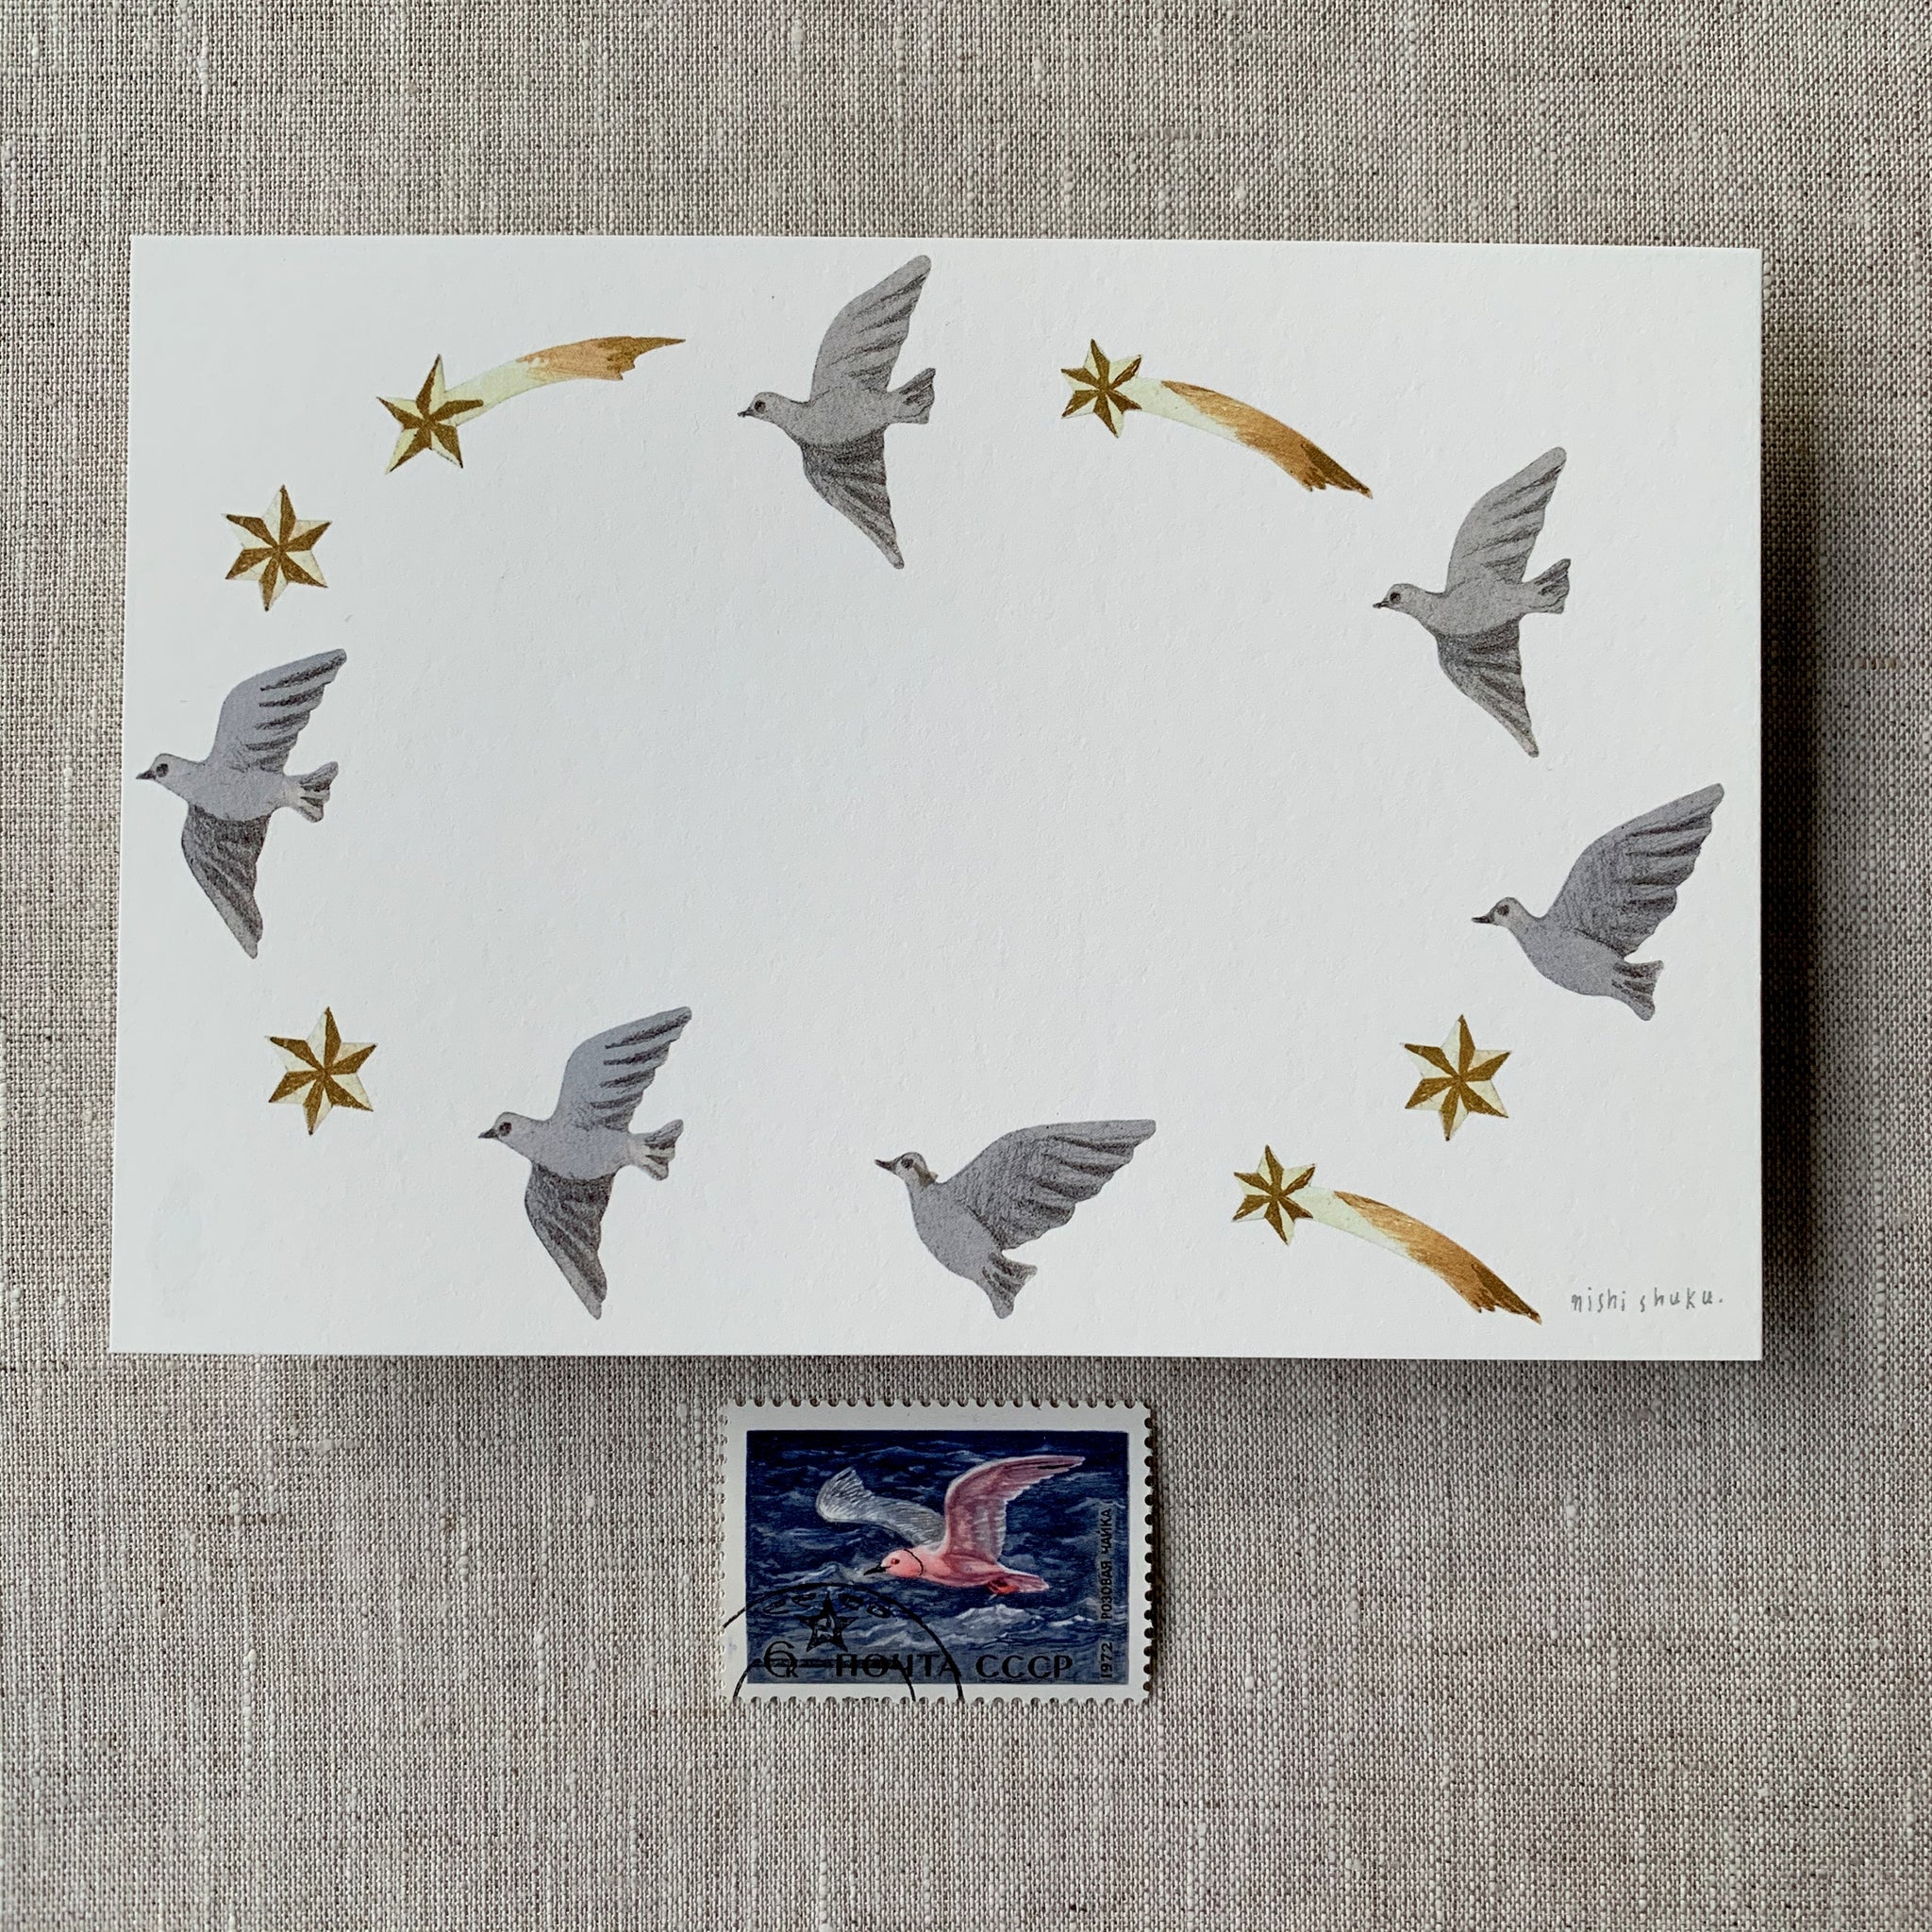 Nishi Shuku Postcard - Birds Chasing Comets - Japanese Stationery